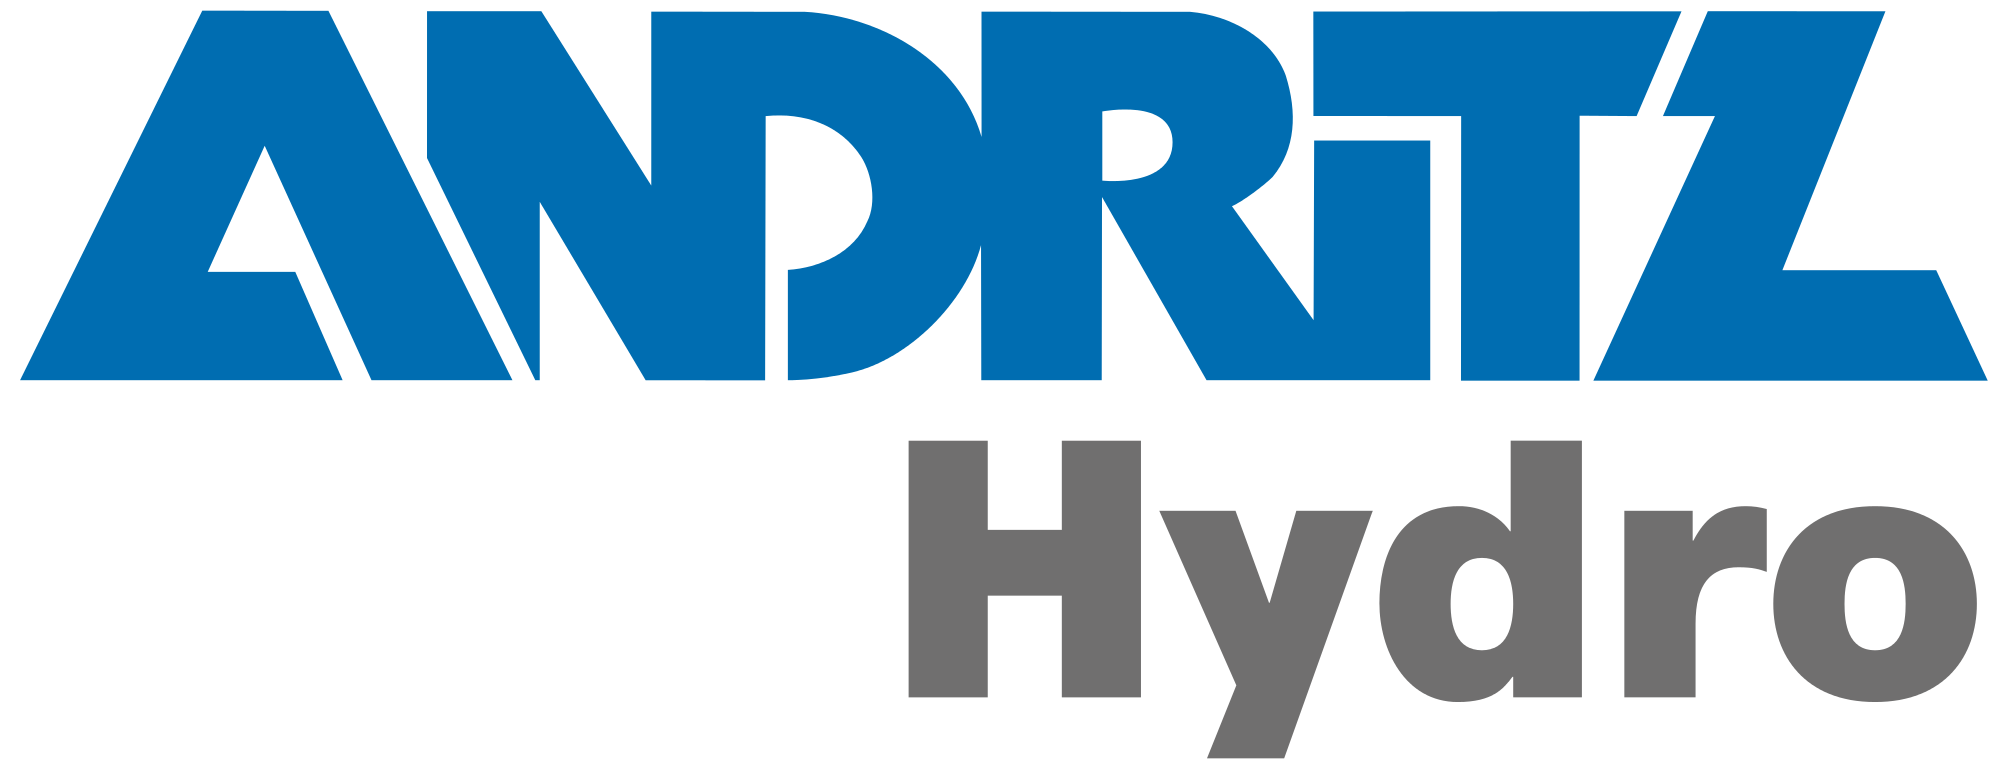 Andritz_Hydro_Logo.svg